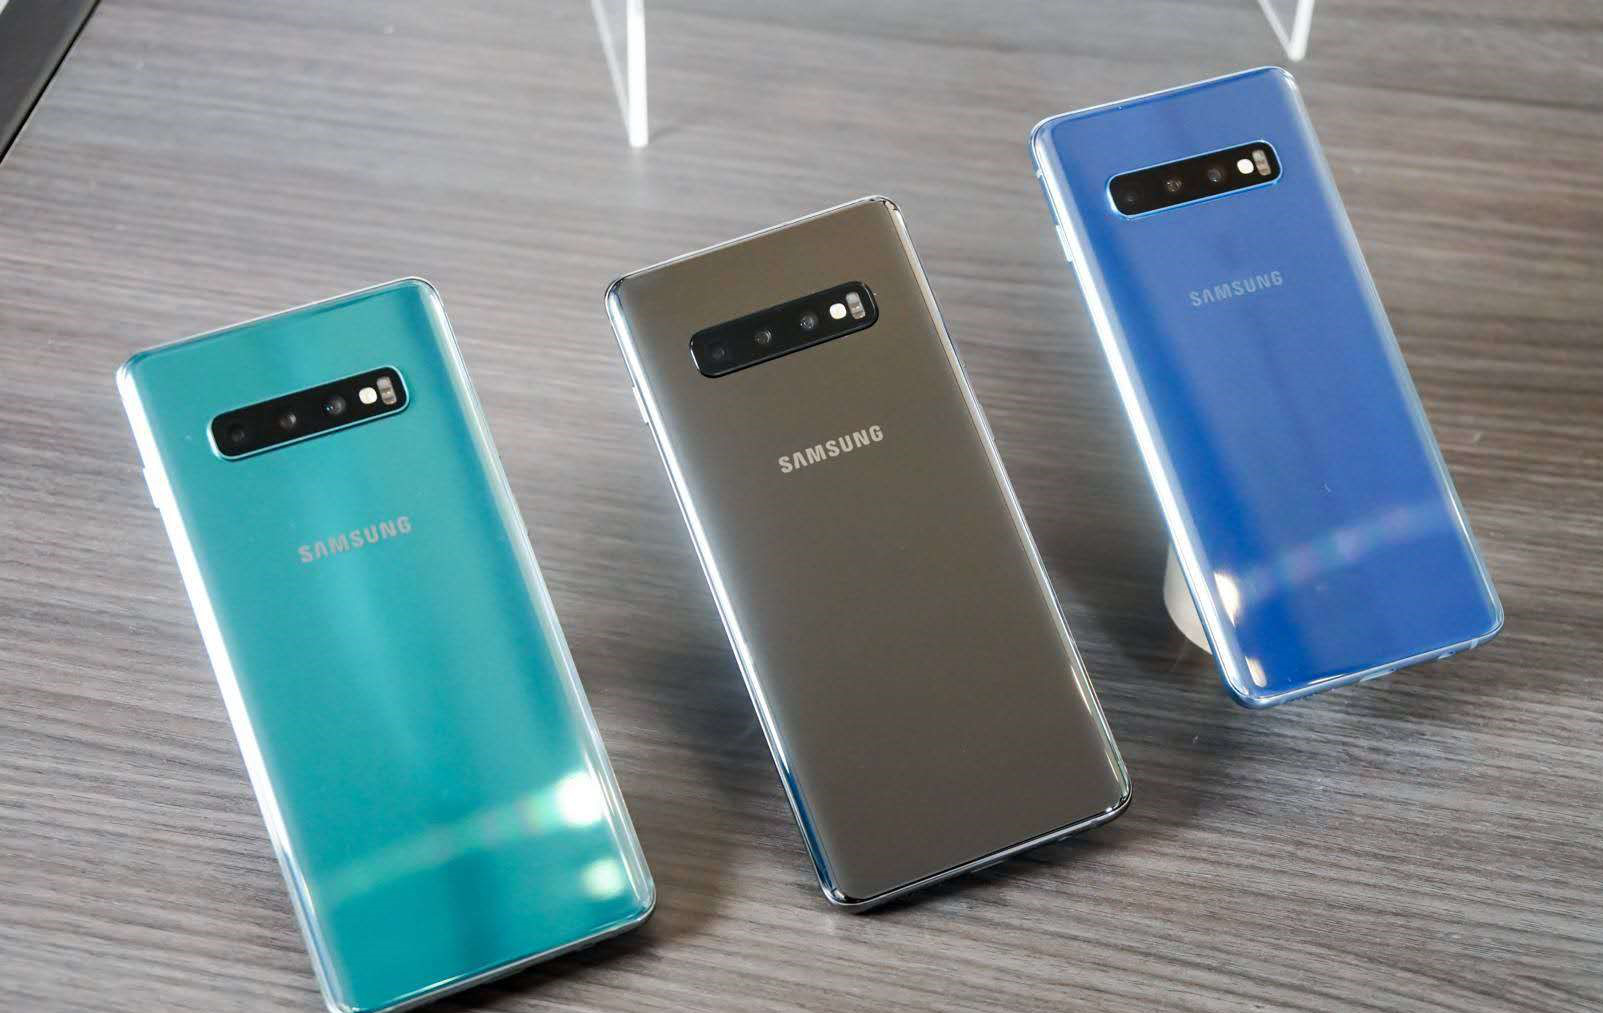 sell Samsung Galaxy s10